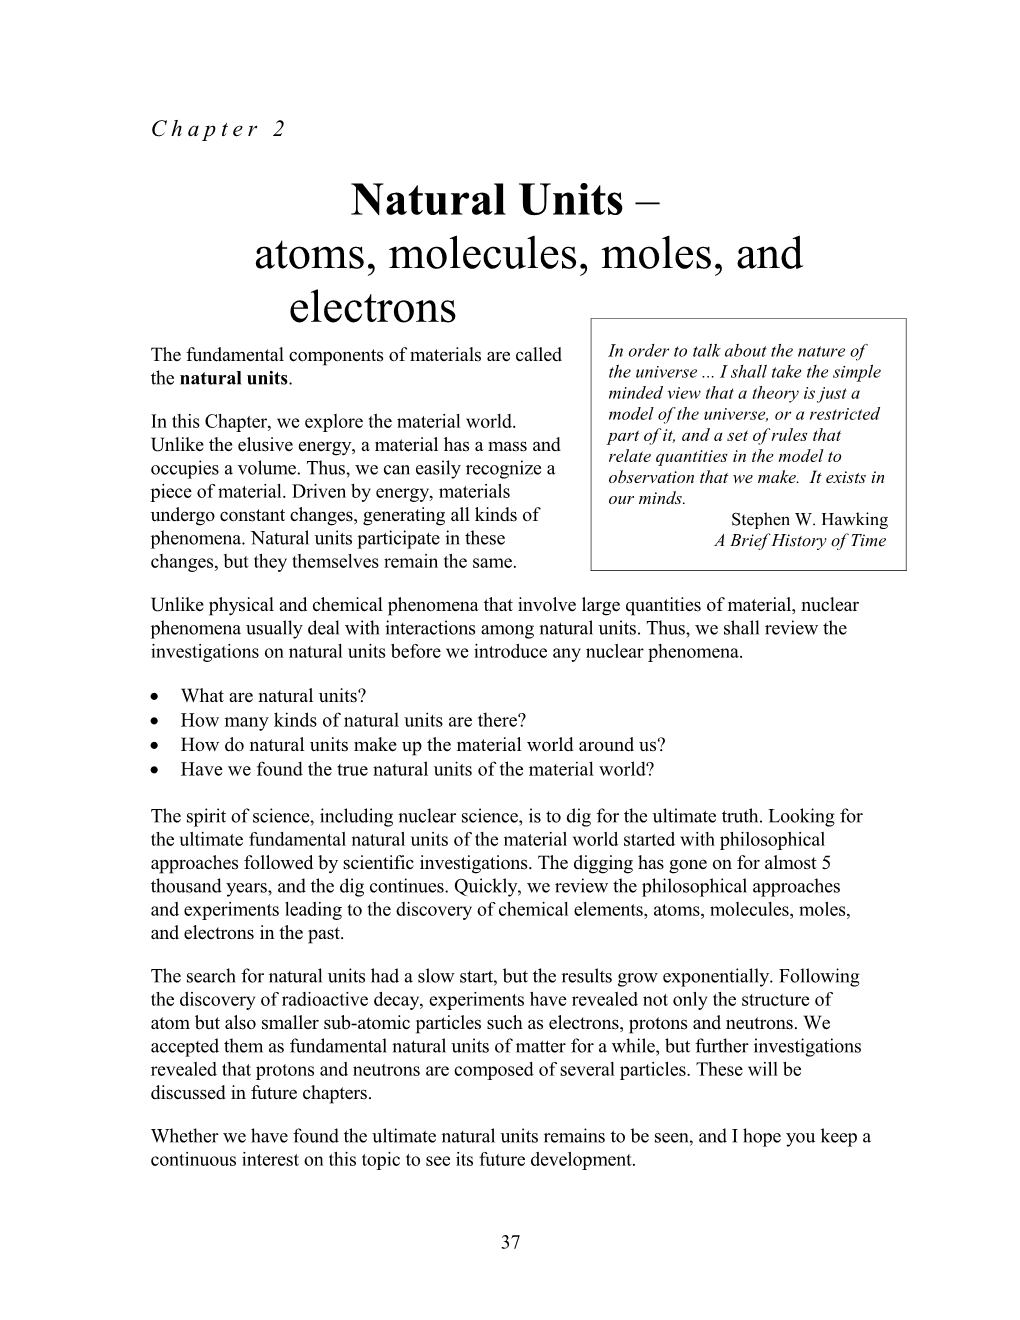 Natural Units Atoms, Molecules, Moles, and Electrons